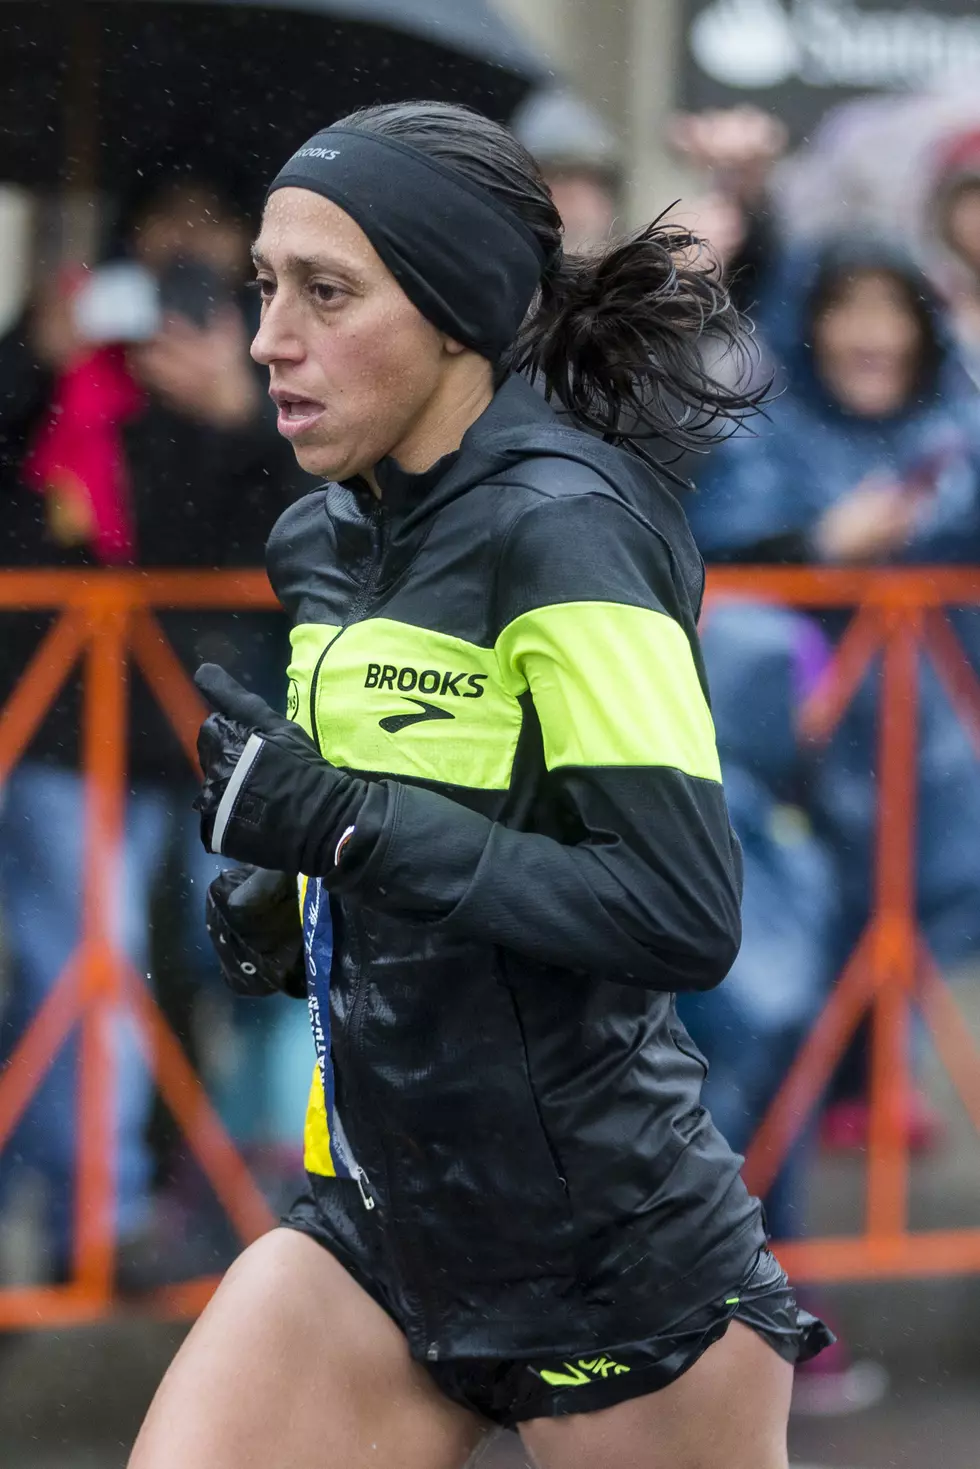 MI Woman First American To Win Boston Marathon since '85